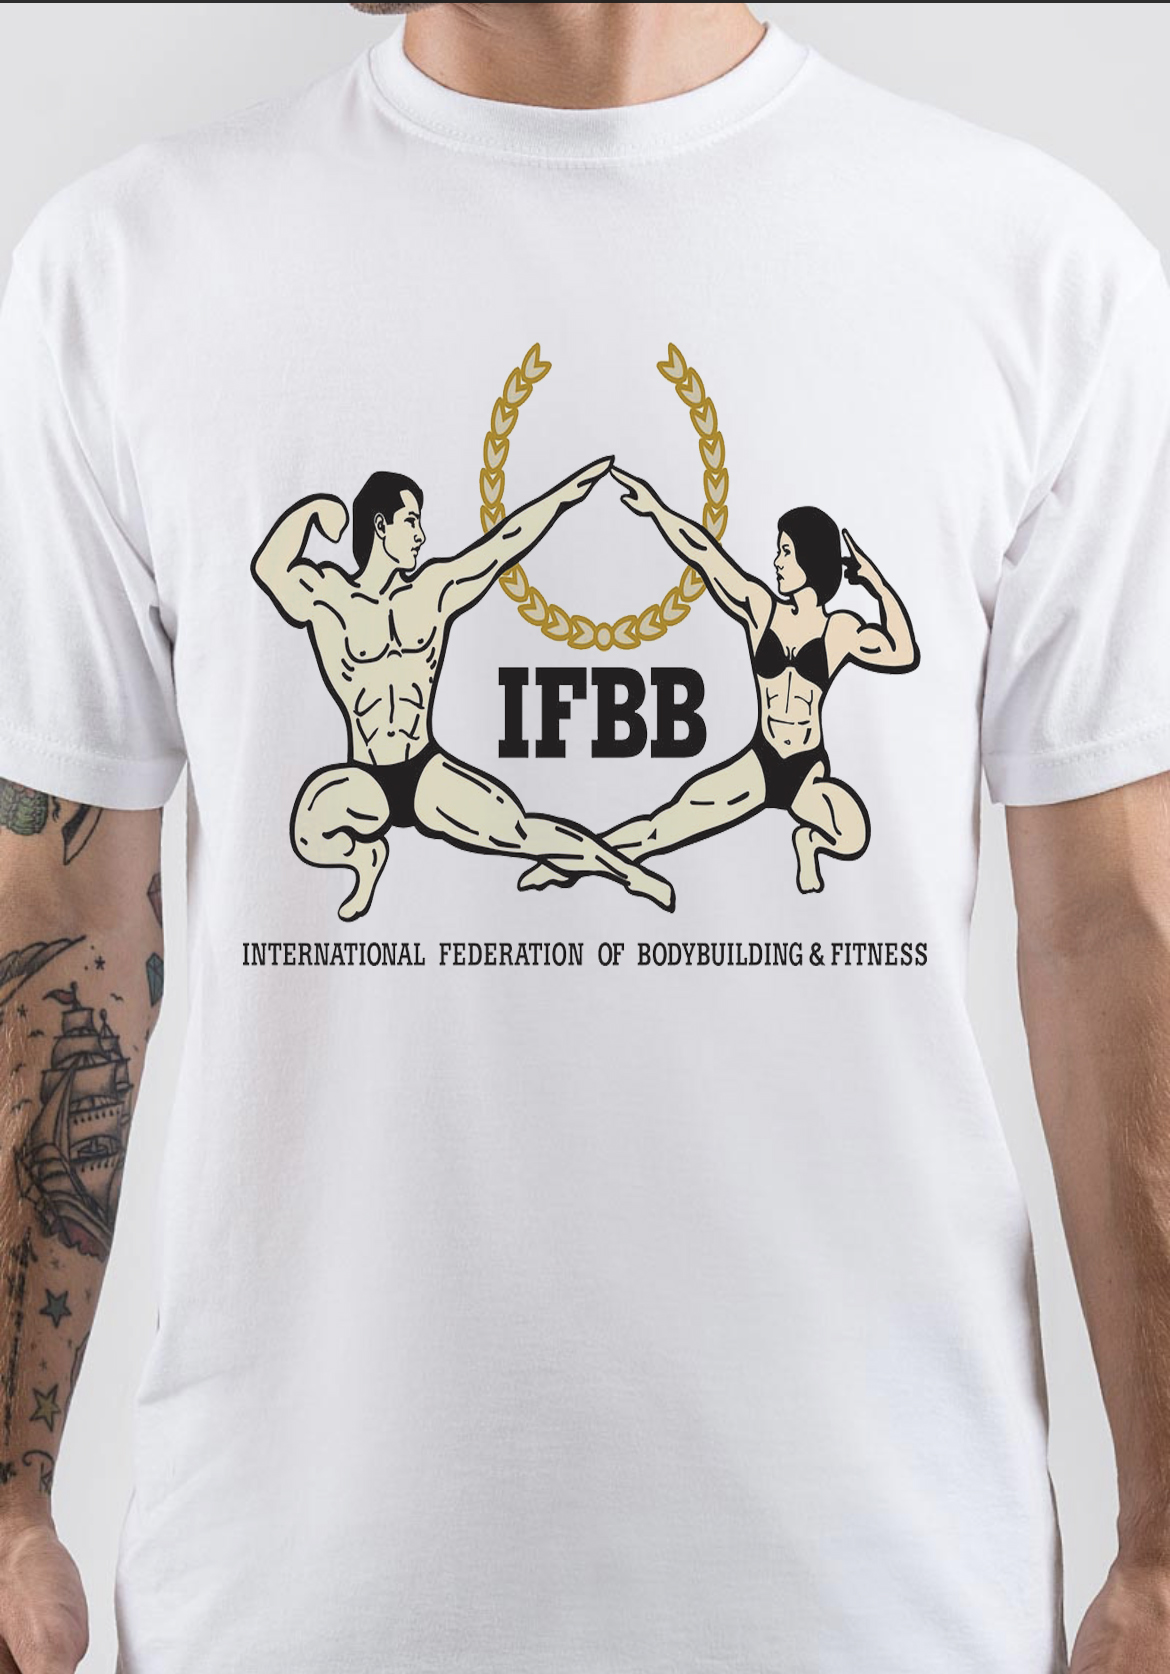 IFBB T-Shirt And Merchandise